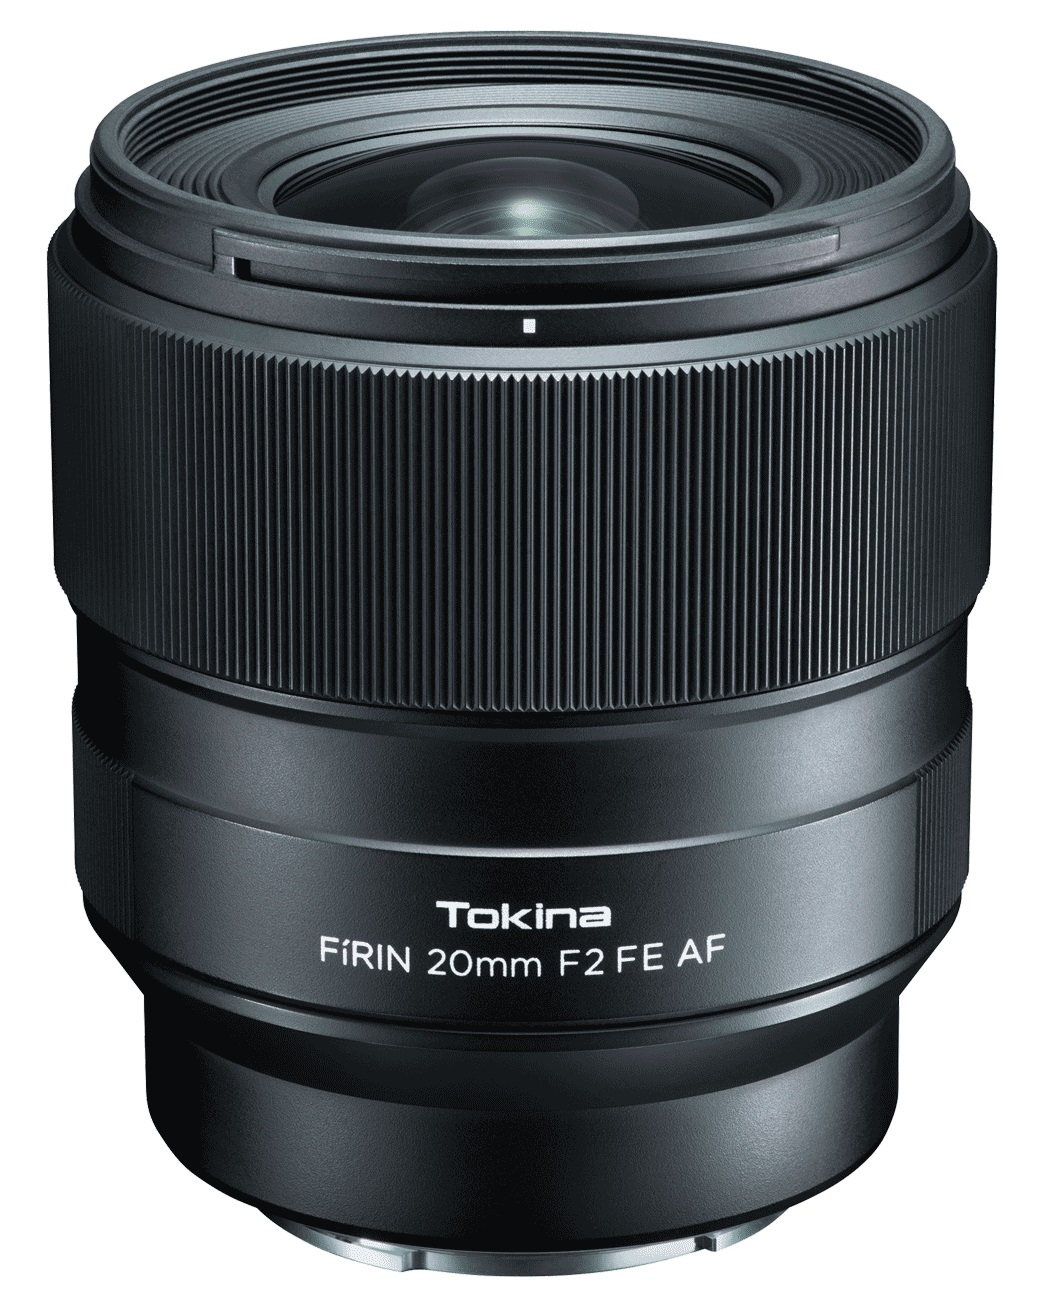 Объектив Tokina FIRIN 20mm F2 FE AF для Sony автофокус